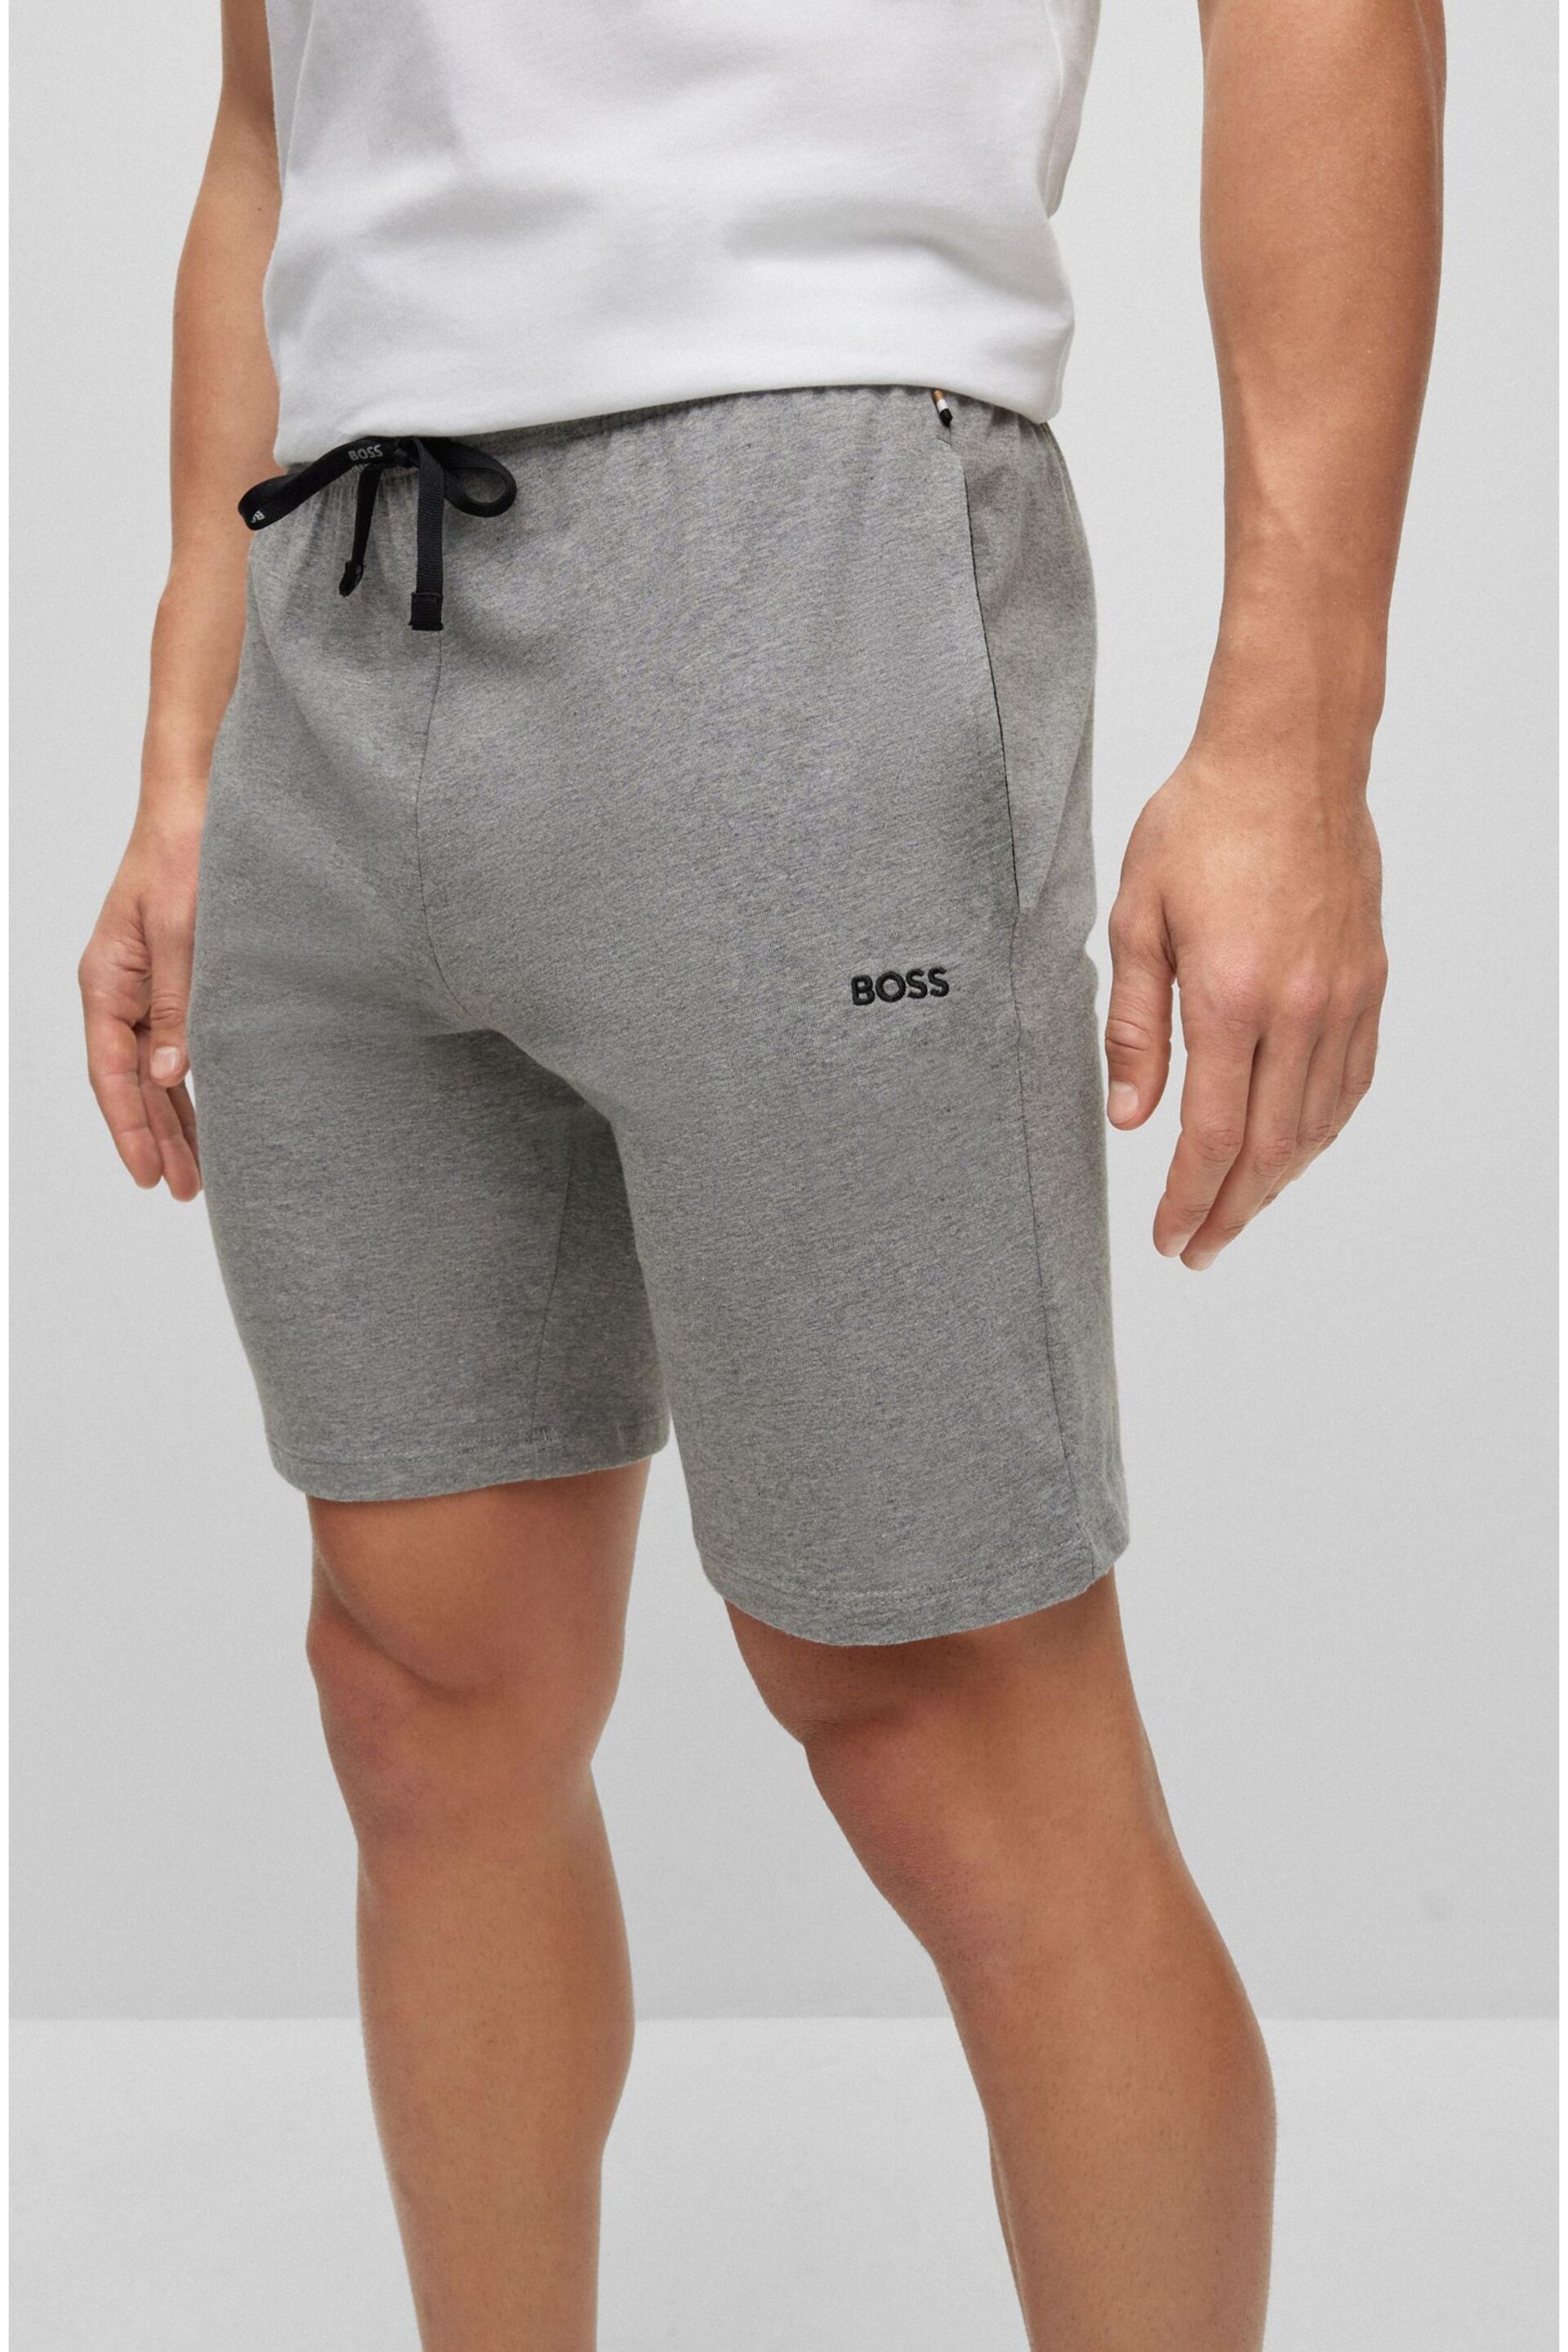 BOSS Grey Stretch Cotton Jersey Shorts - Image 4 of 5